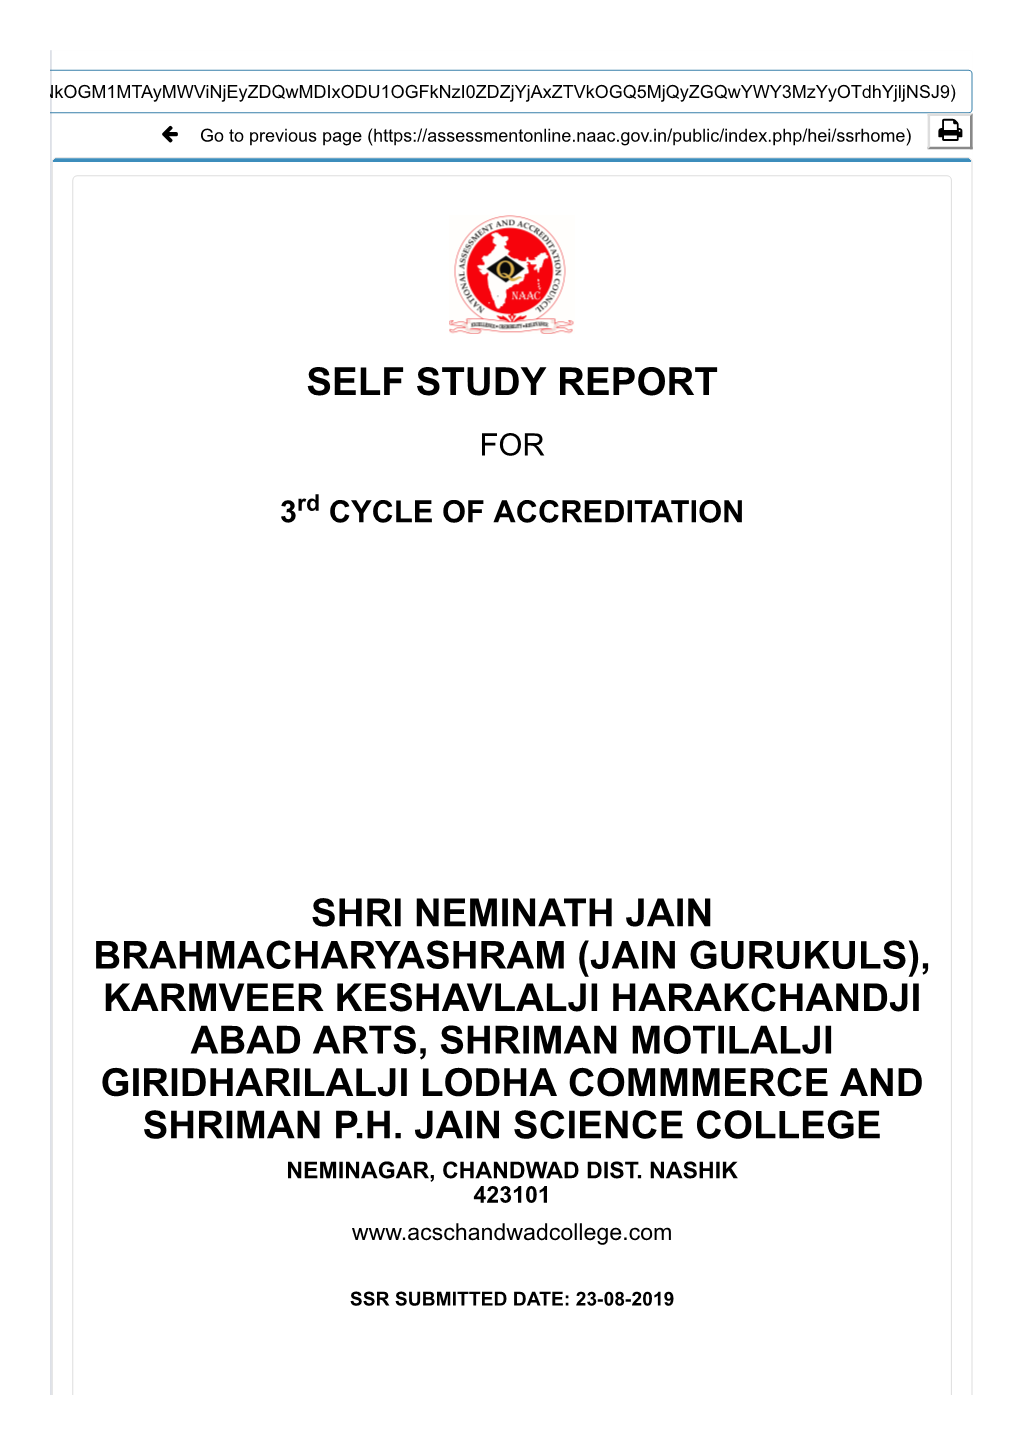 Self Study Report Shri Neminath Jain